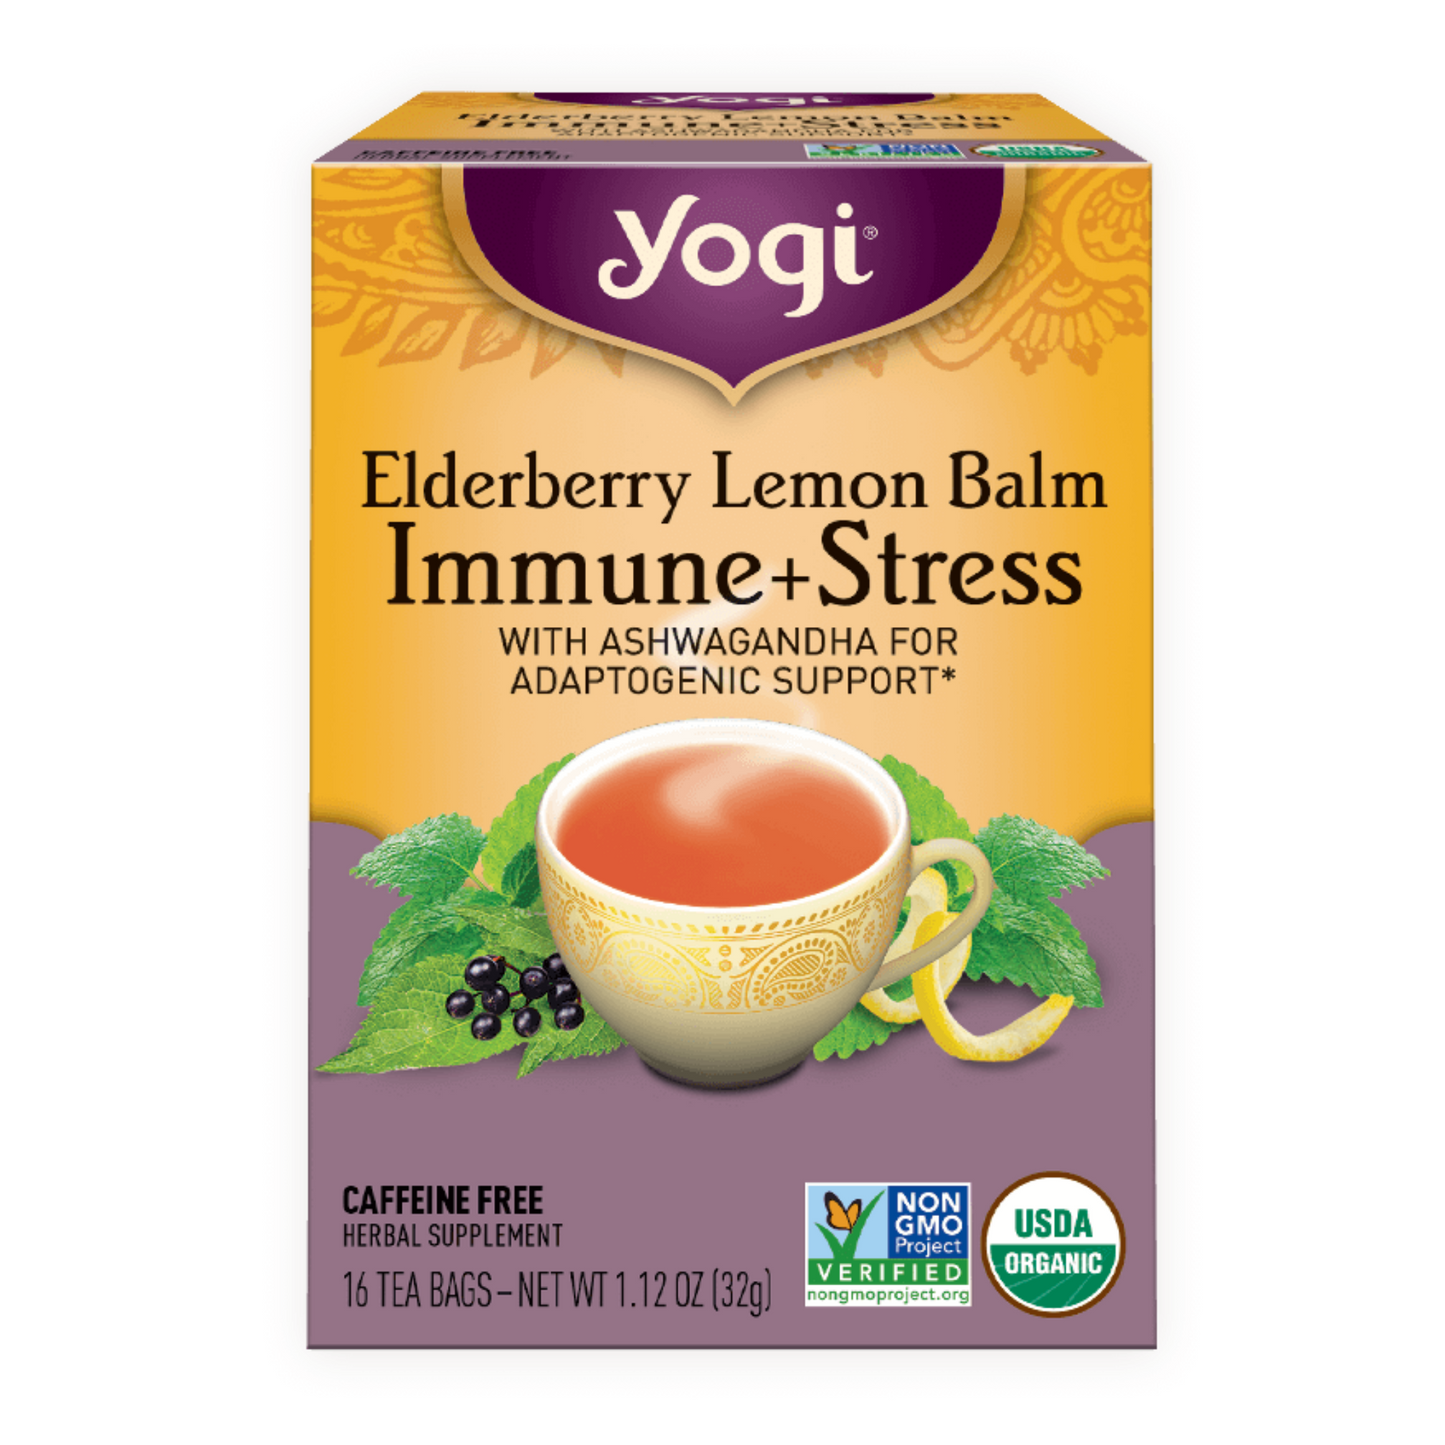 Primary Image of Elderberry Lemon Balm Immune Tea Bags